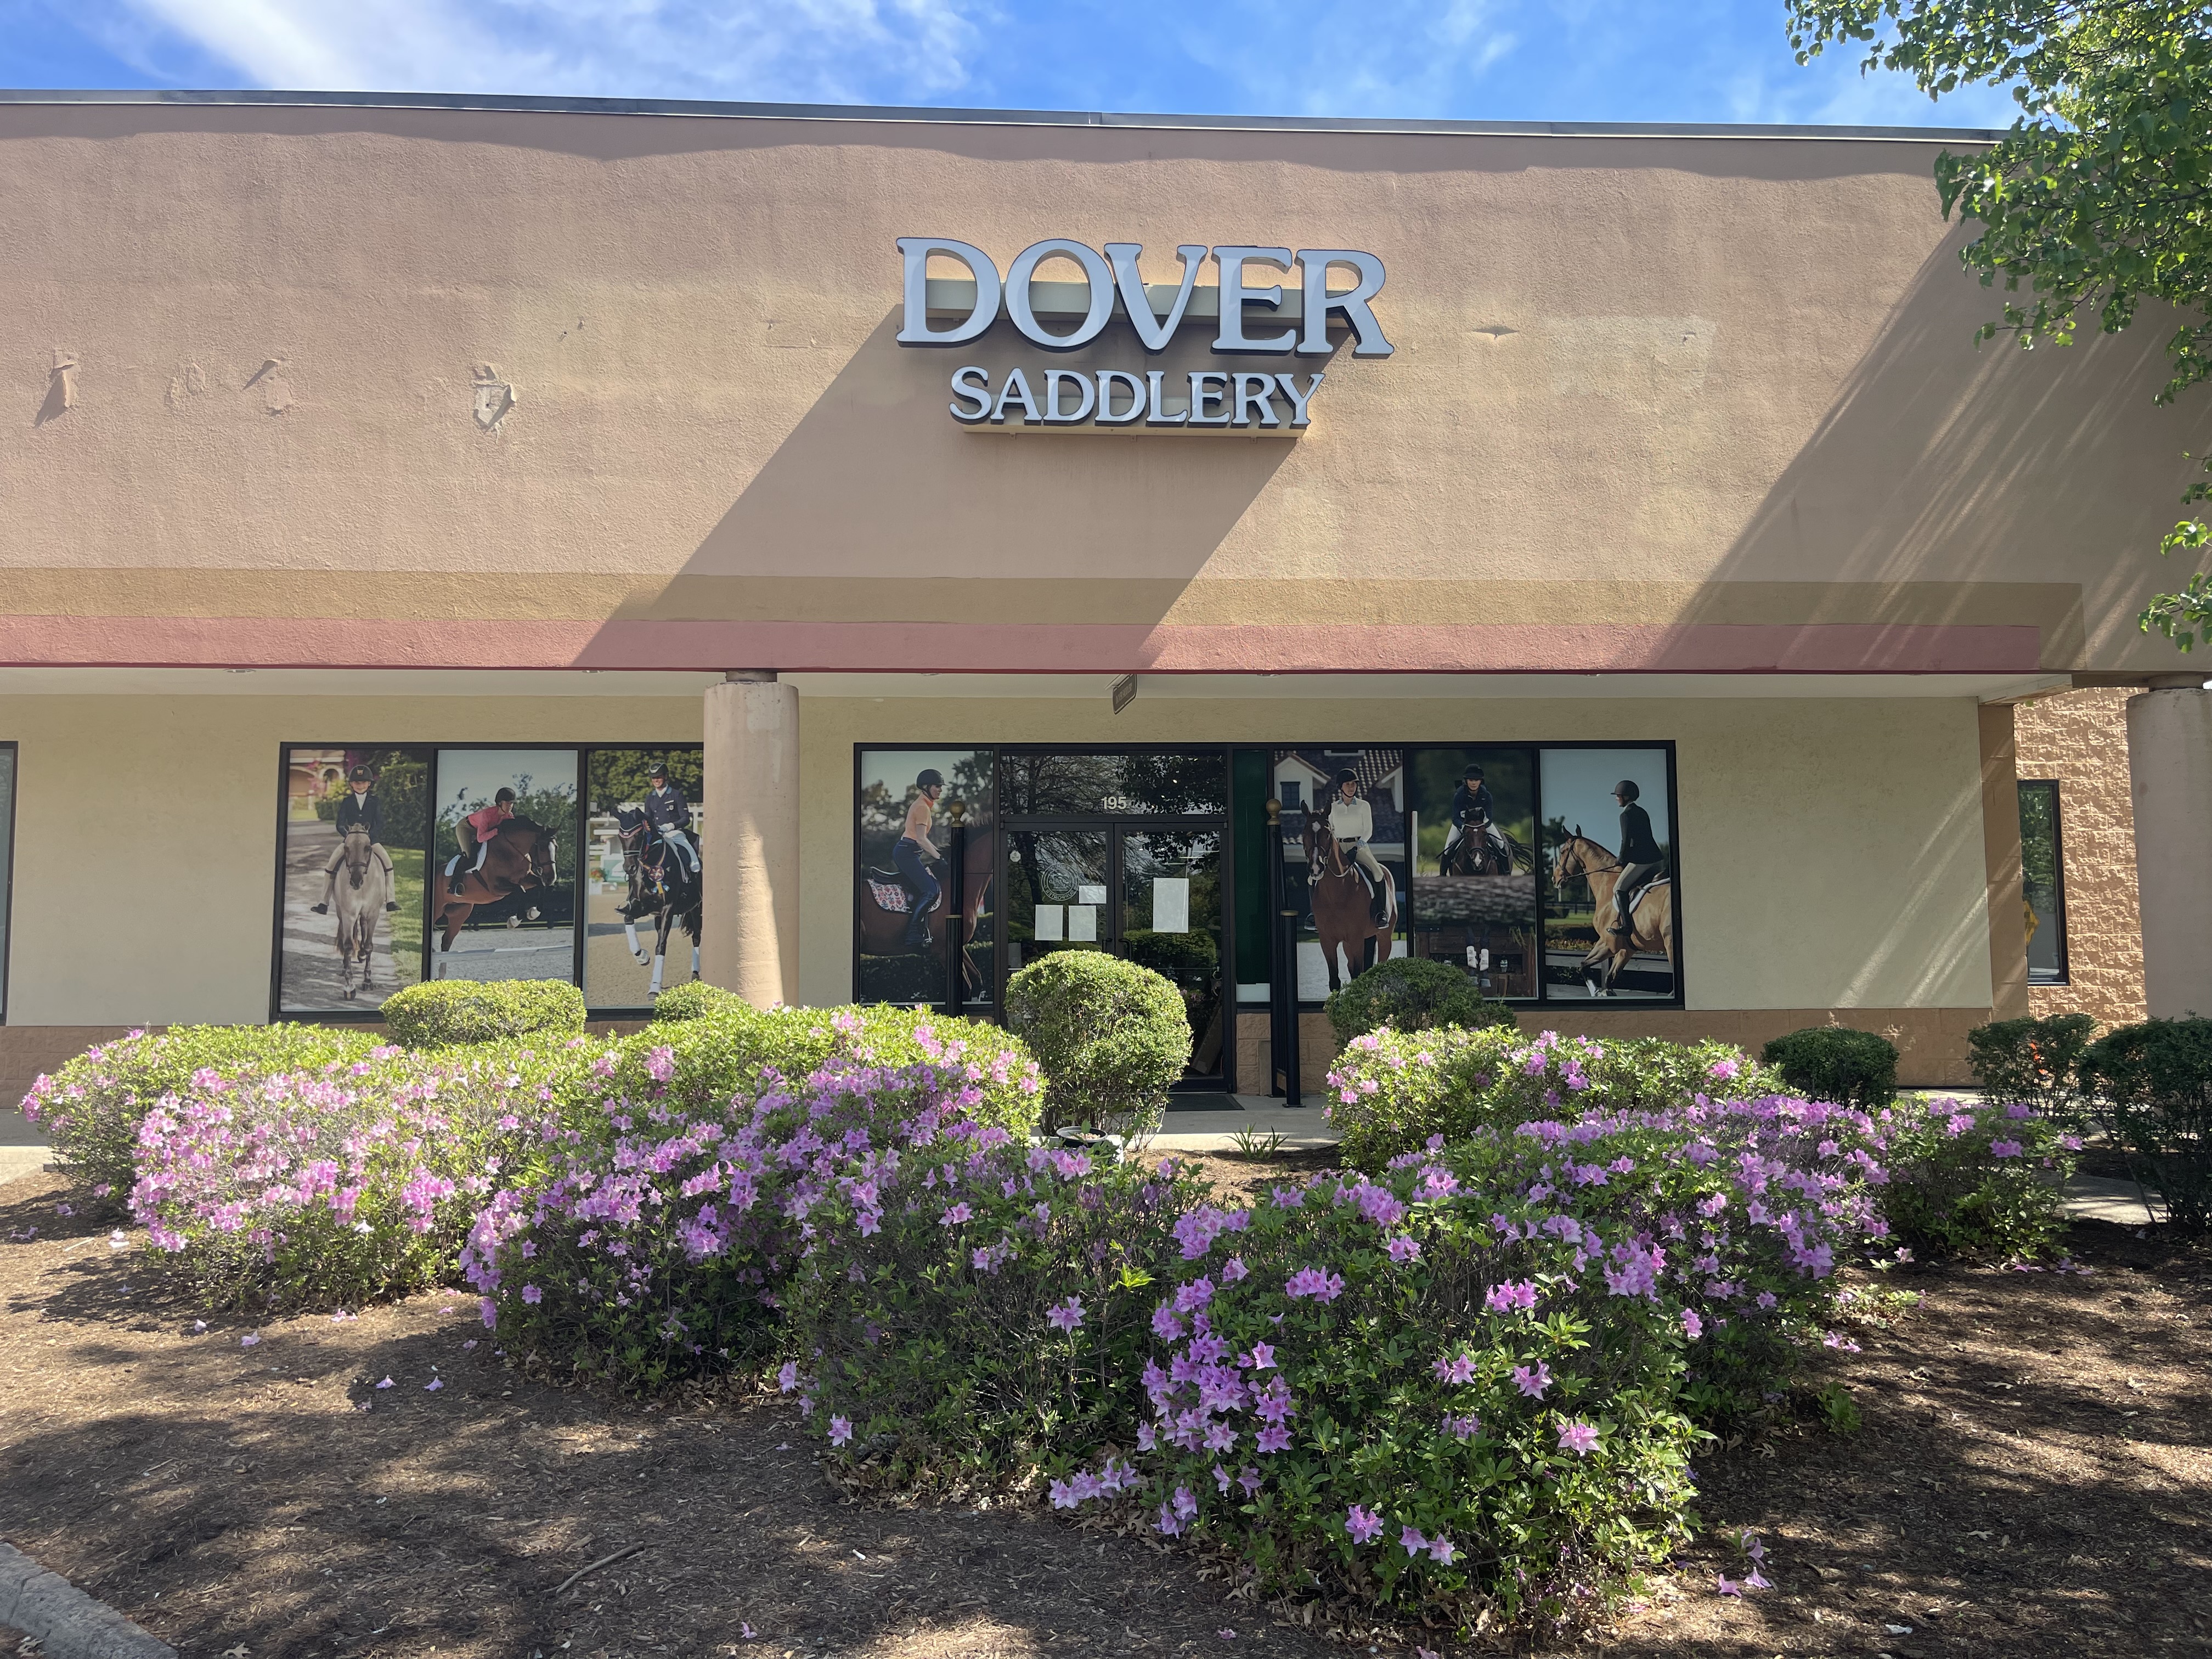 Dovery Saddlery Charlottesville, VA storefront